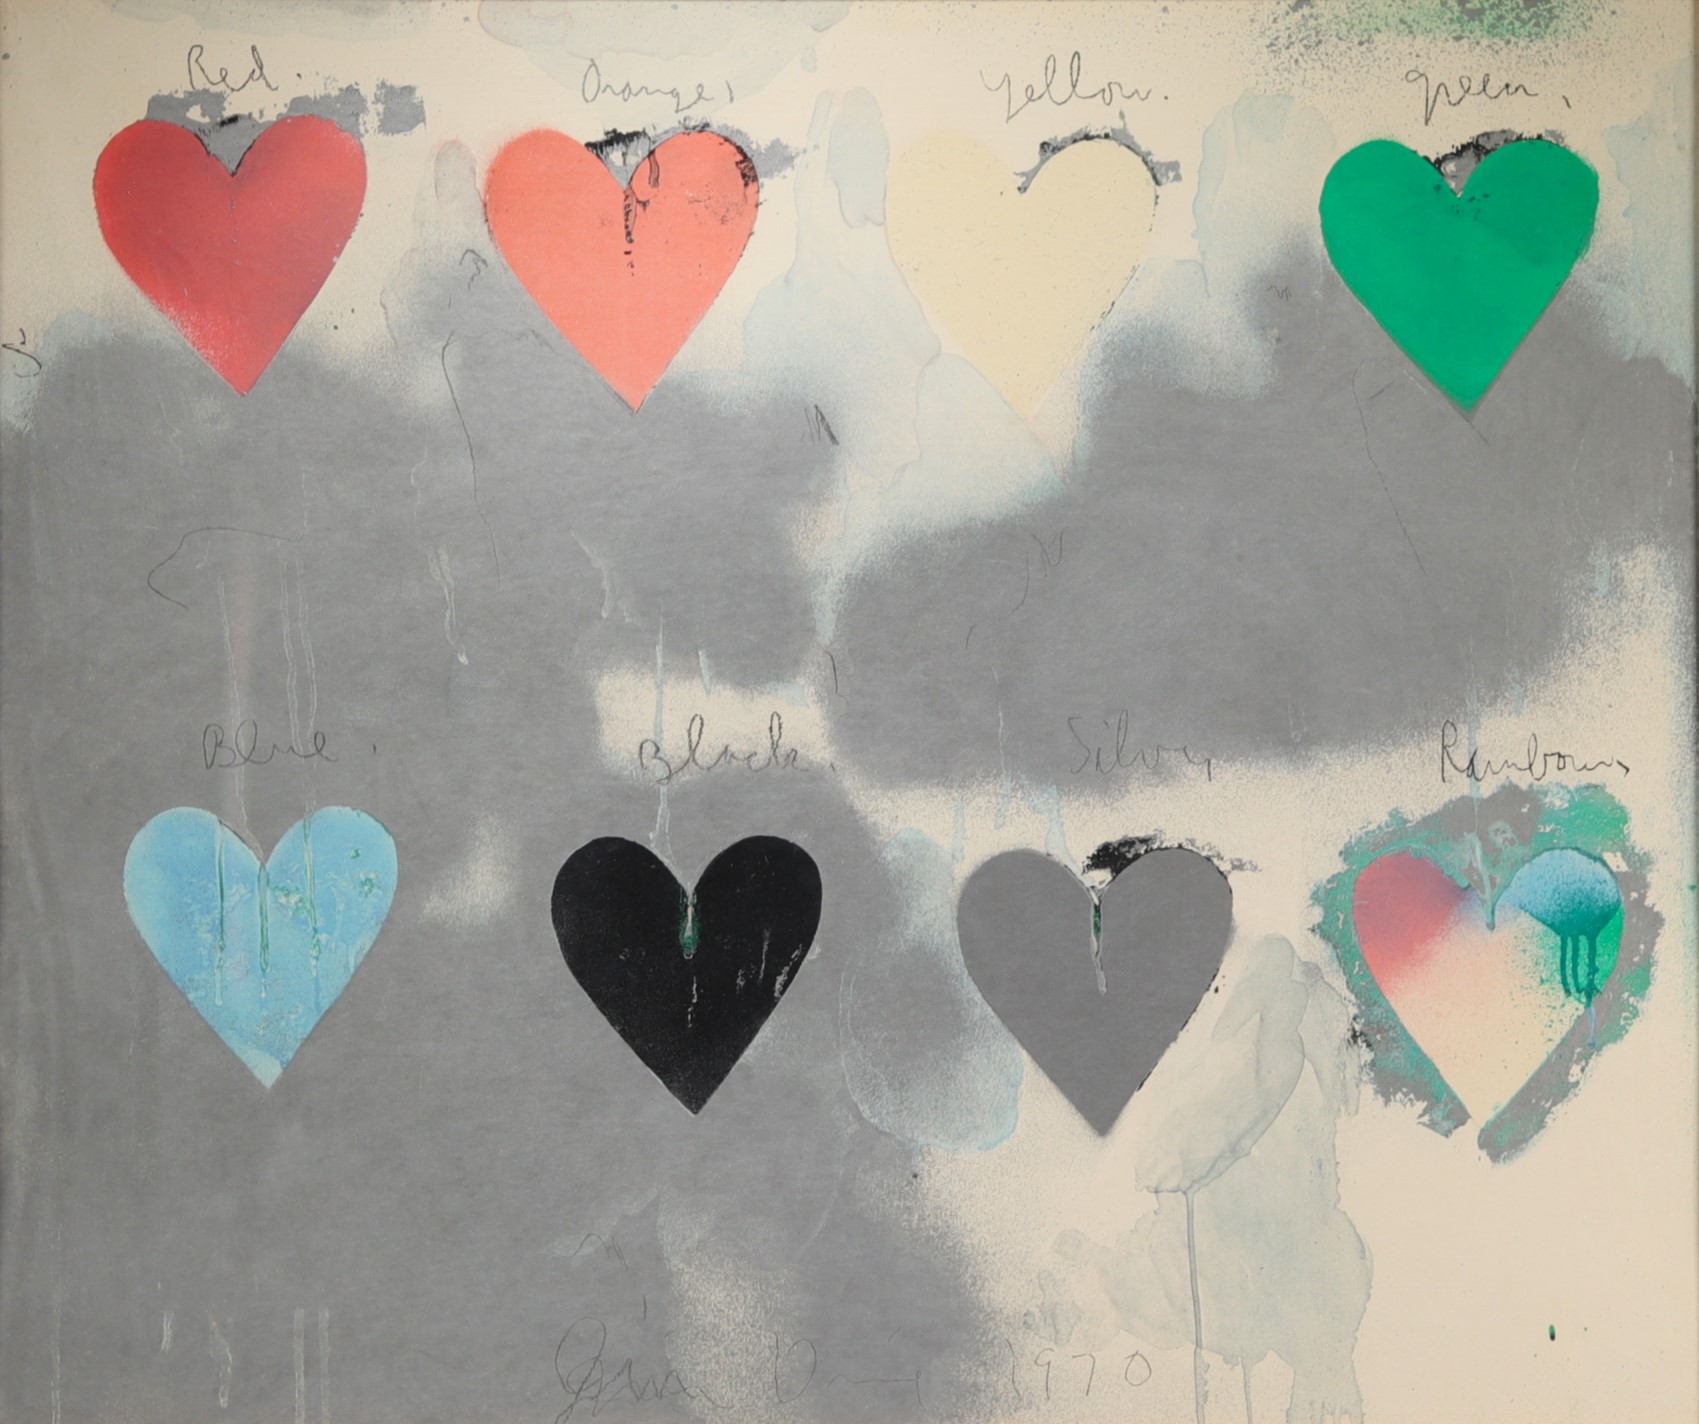 Jim DINE (1935- ) "8 Hearts" Print on paper, 1970.